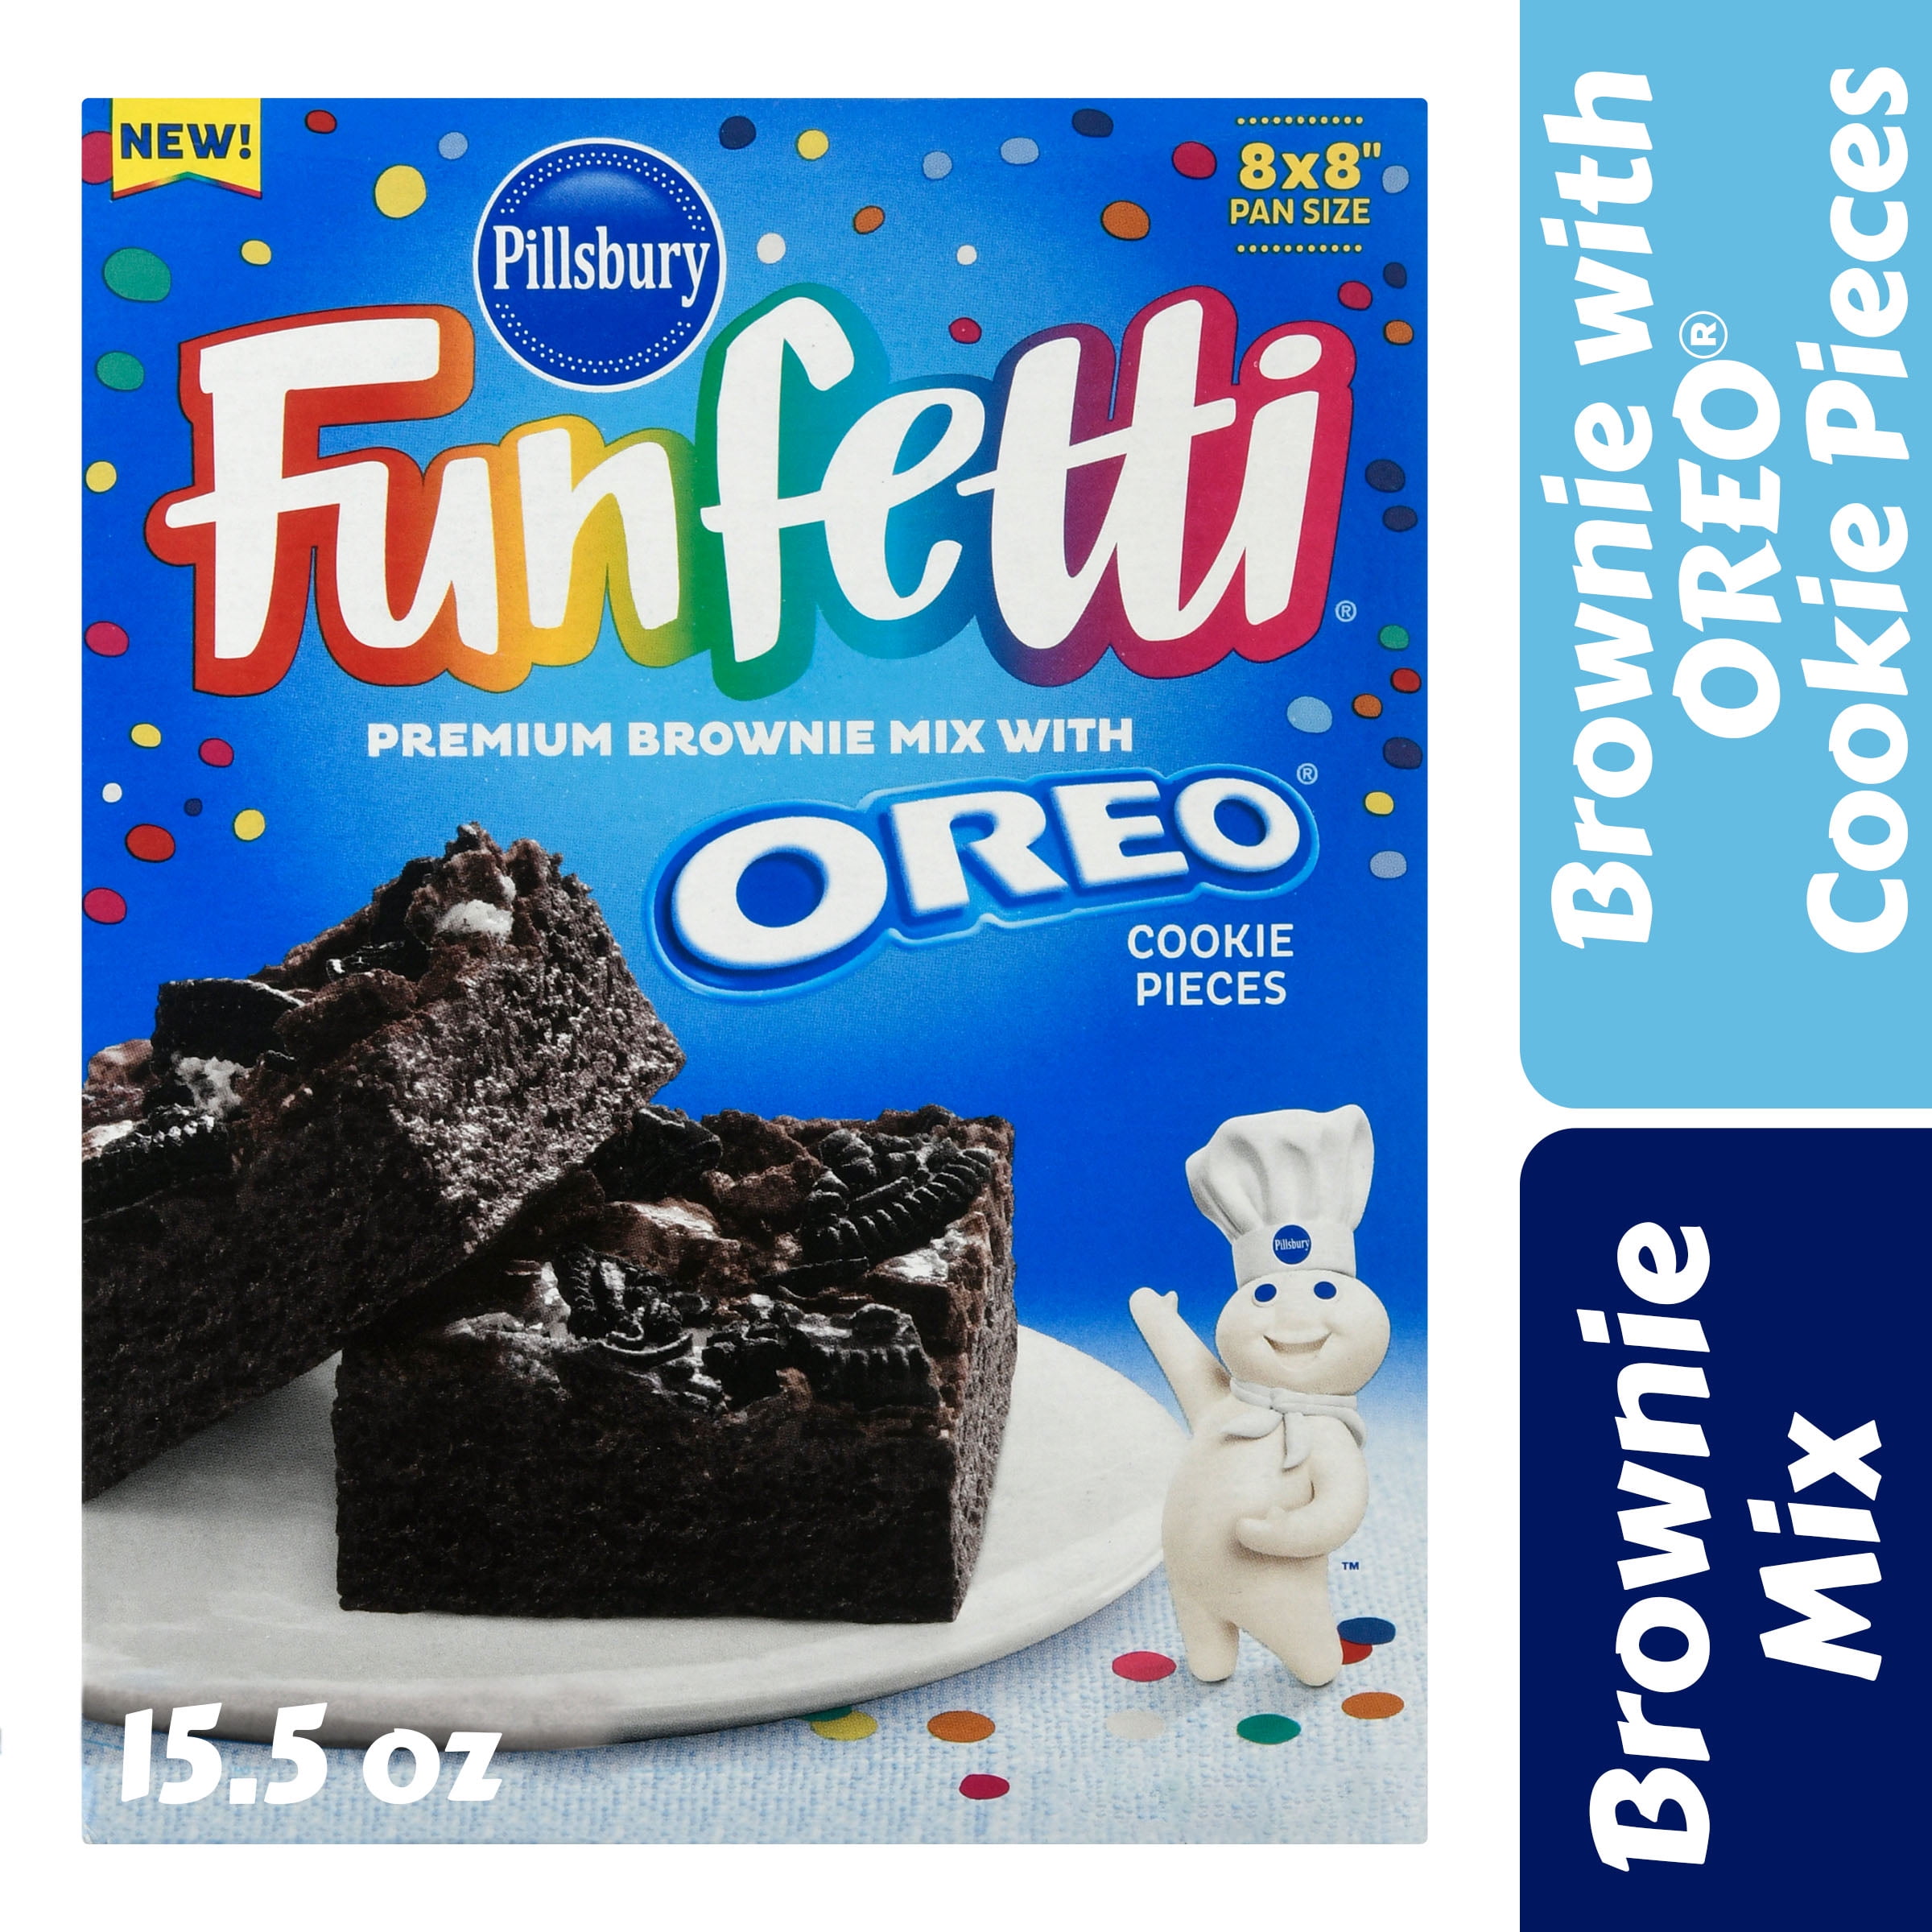 Pillsbury Funfetti Premium Brownie Mix with OREO Cookie Pieces, 15.5 Oz Box